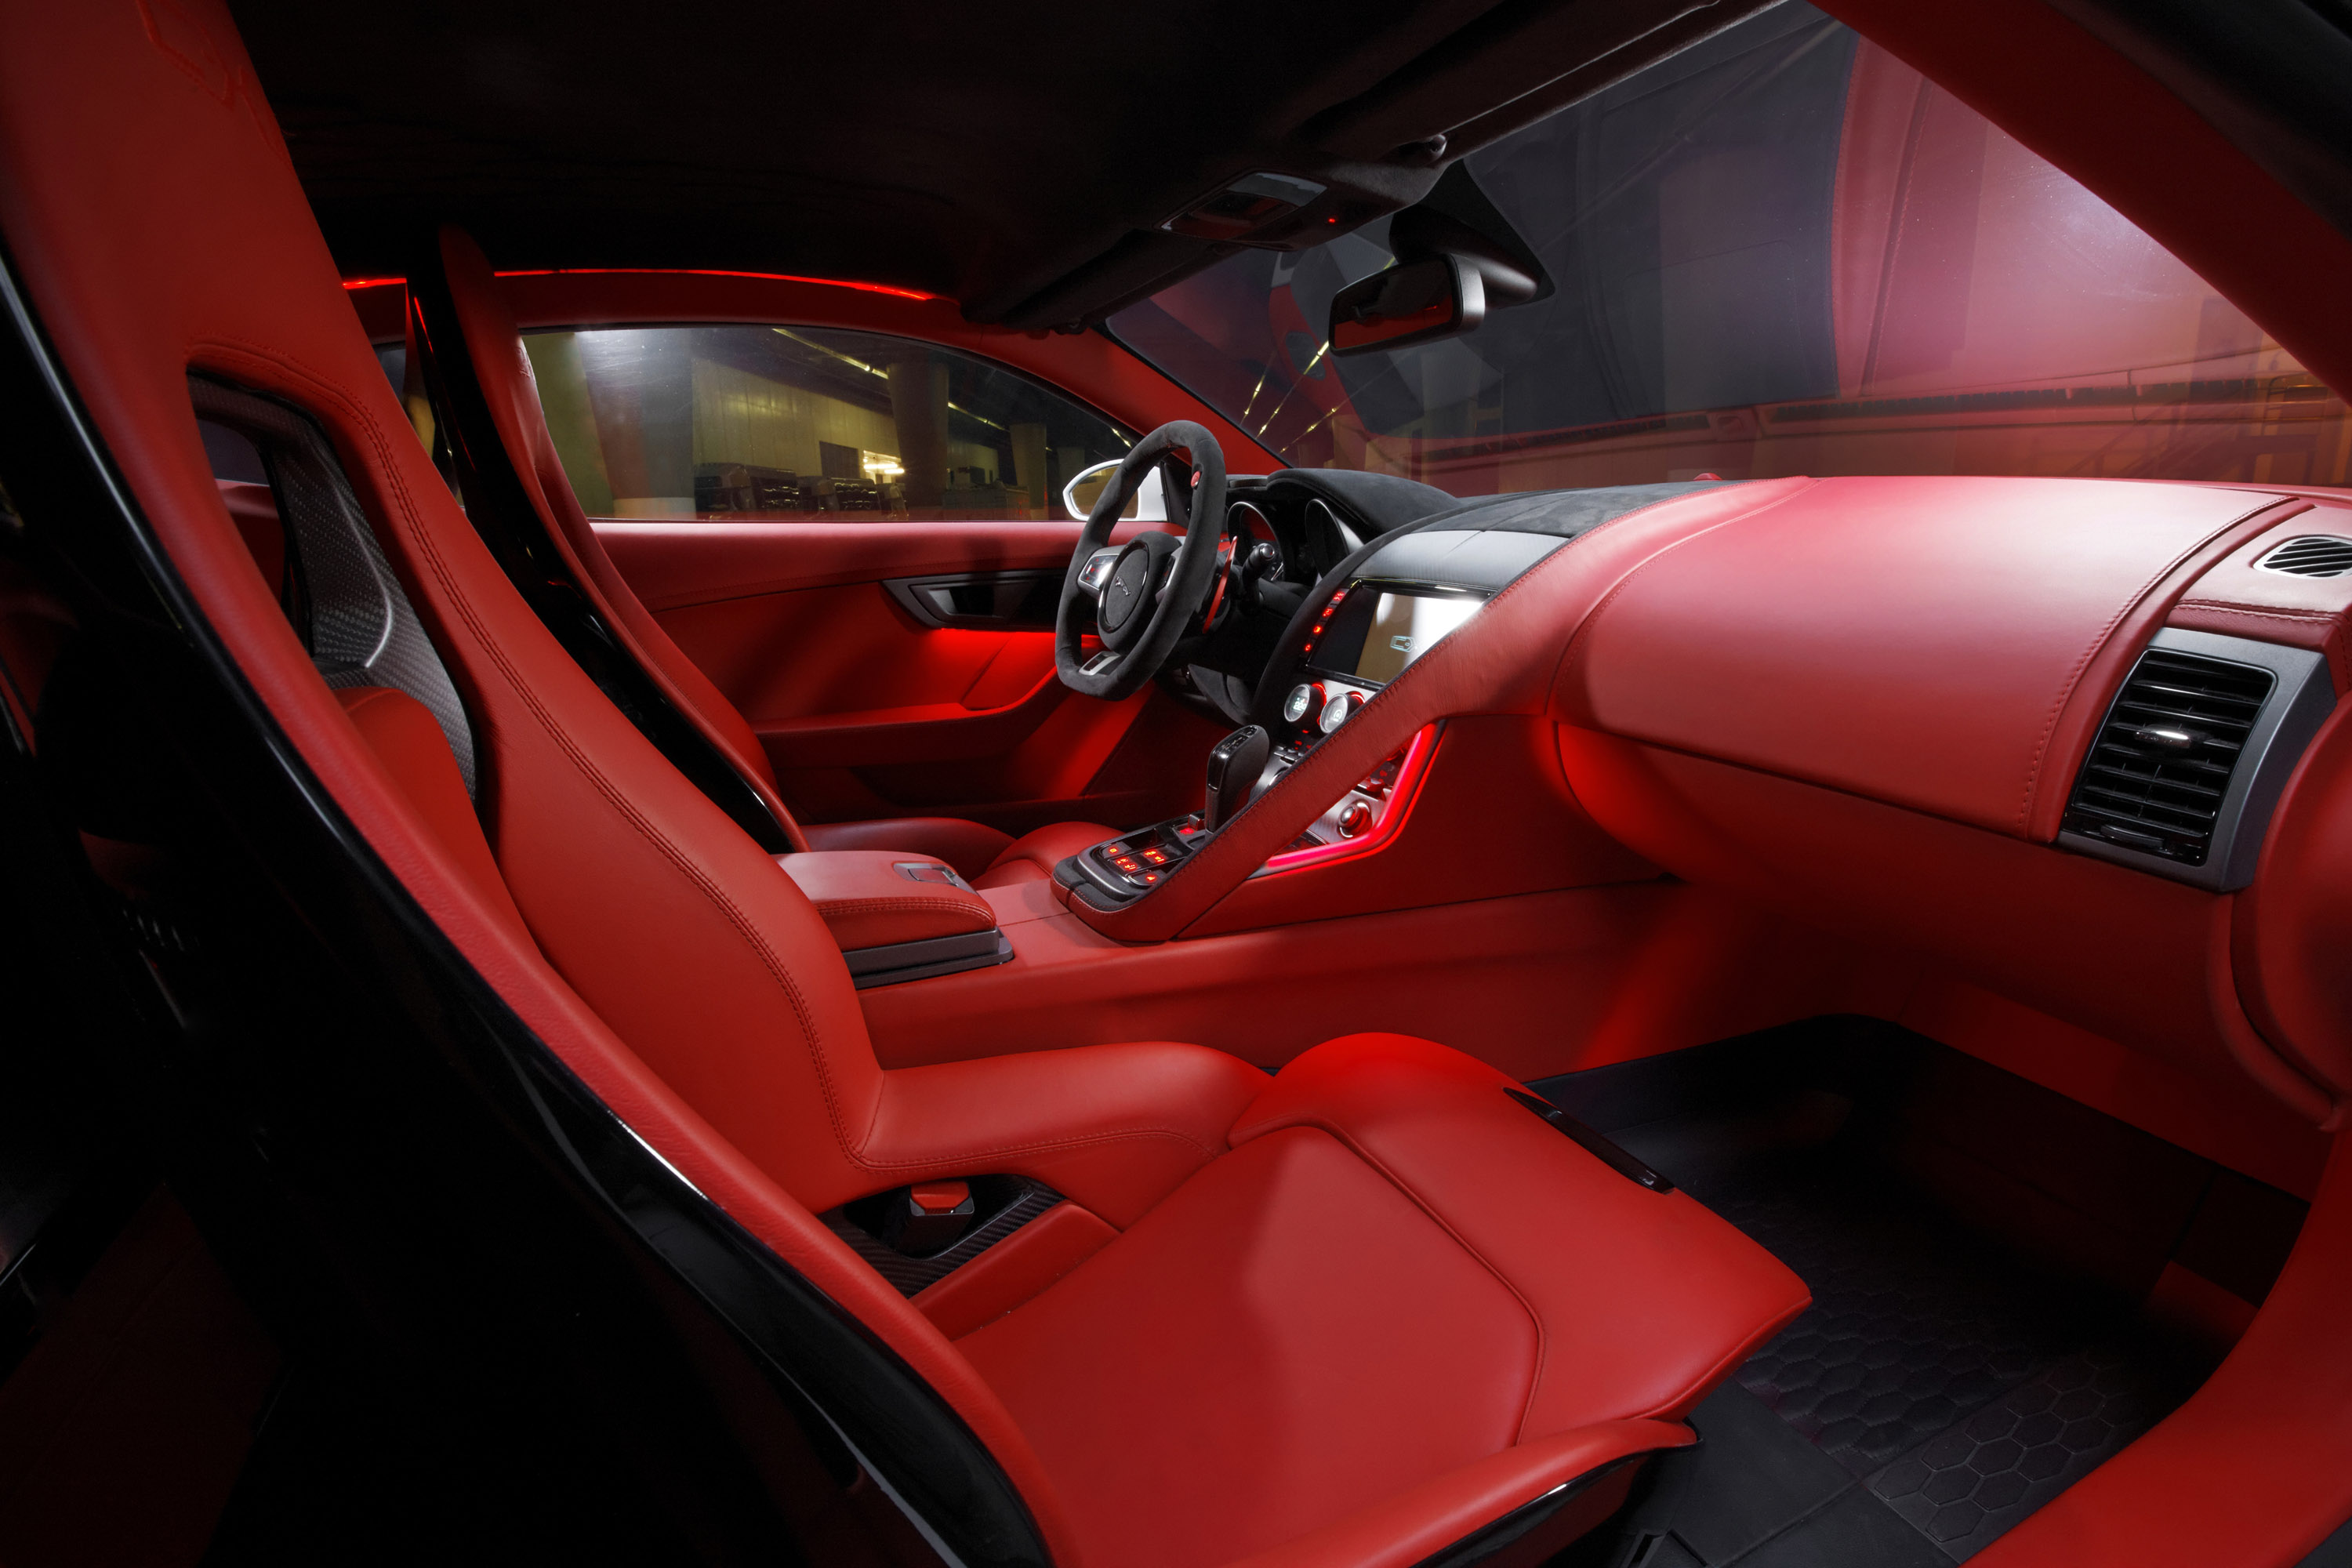 Самый красивый салон. 2011 Jaguar c-x16 Concept салон. Ягуар красный салон. Красивый салон авто. Шикарный салон автомобиля.